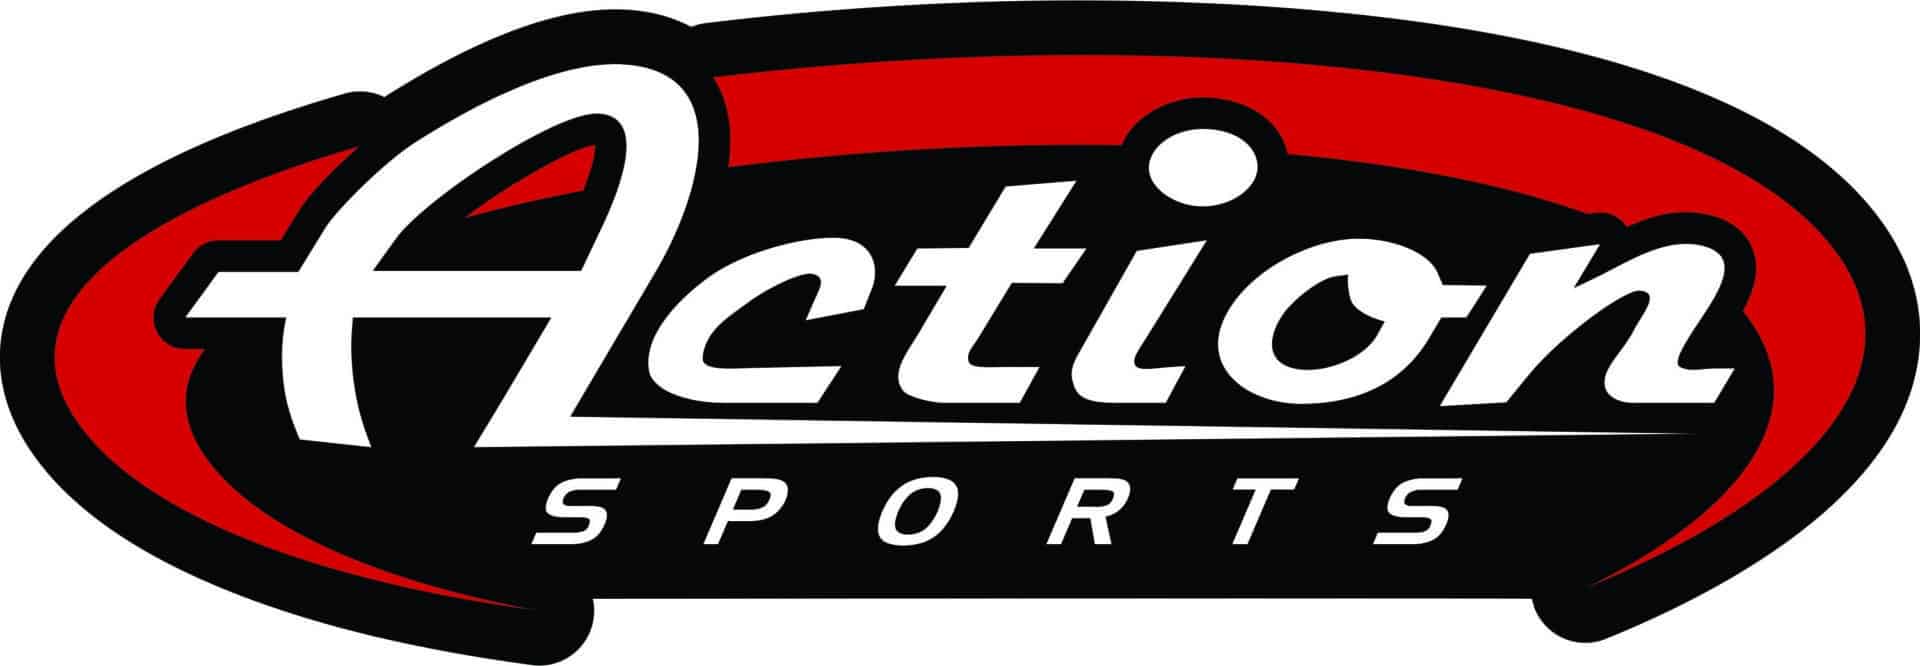 Action Sports logo1